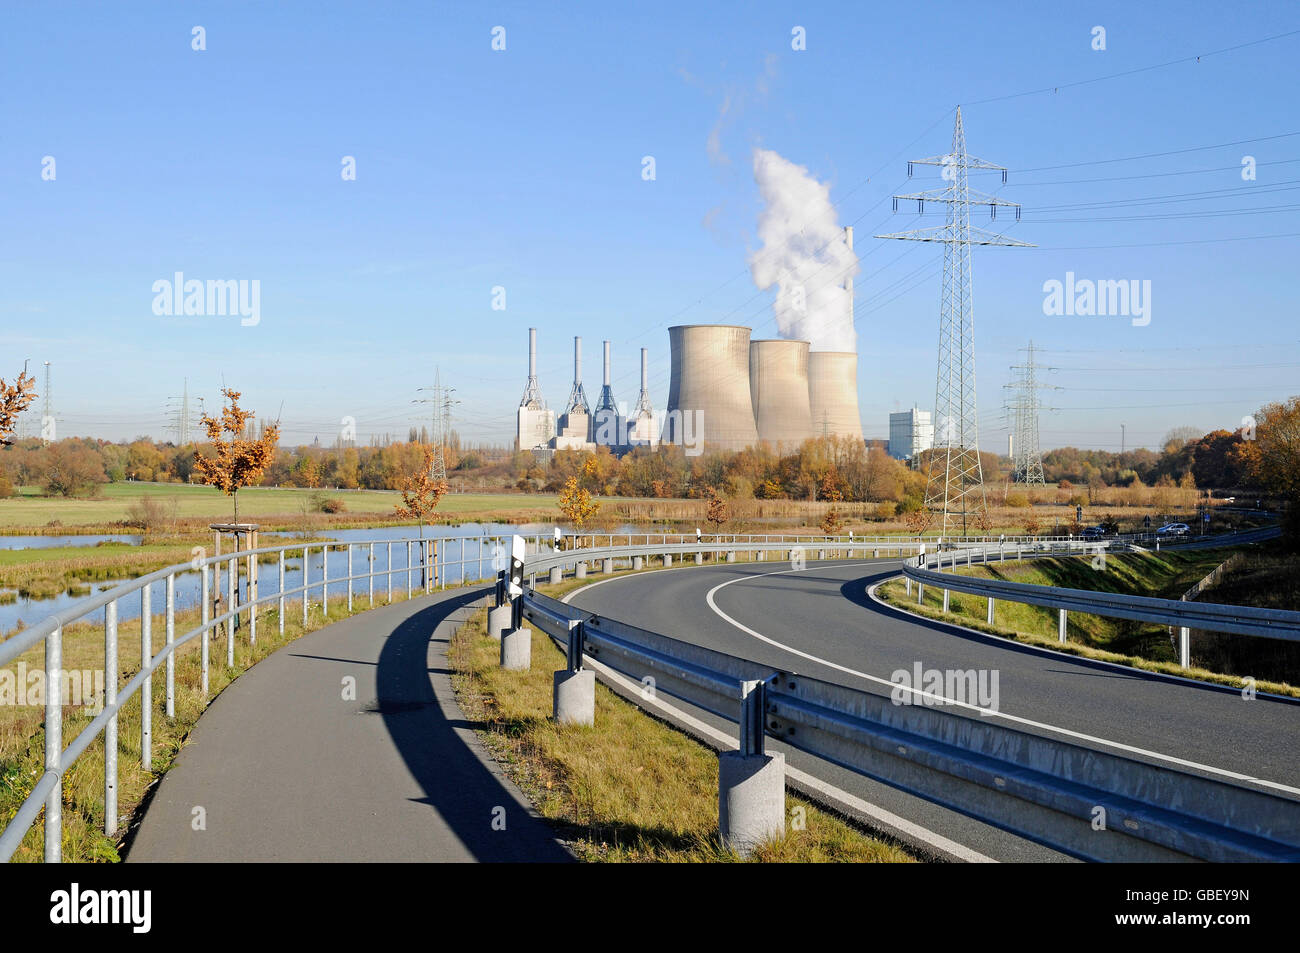 Gersteinwerk plant, RWE Power AG, Tibaum nature reserve, Stockum-Werne, North Rhine-Westphalia, Germany / Combined cycle power plant, coal, natural gas Stock Photo